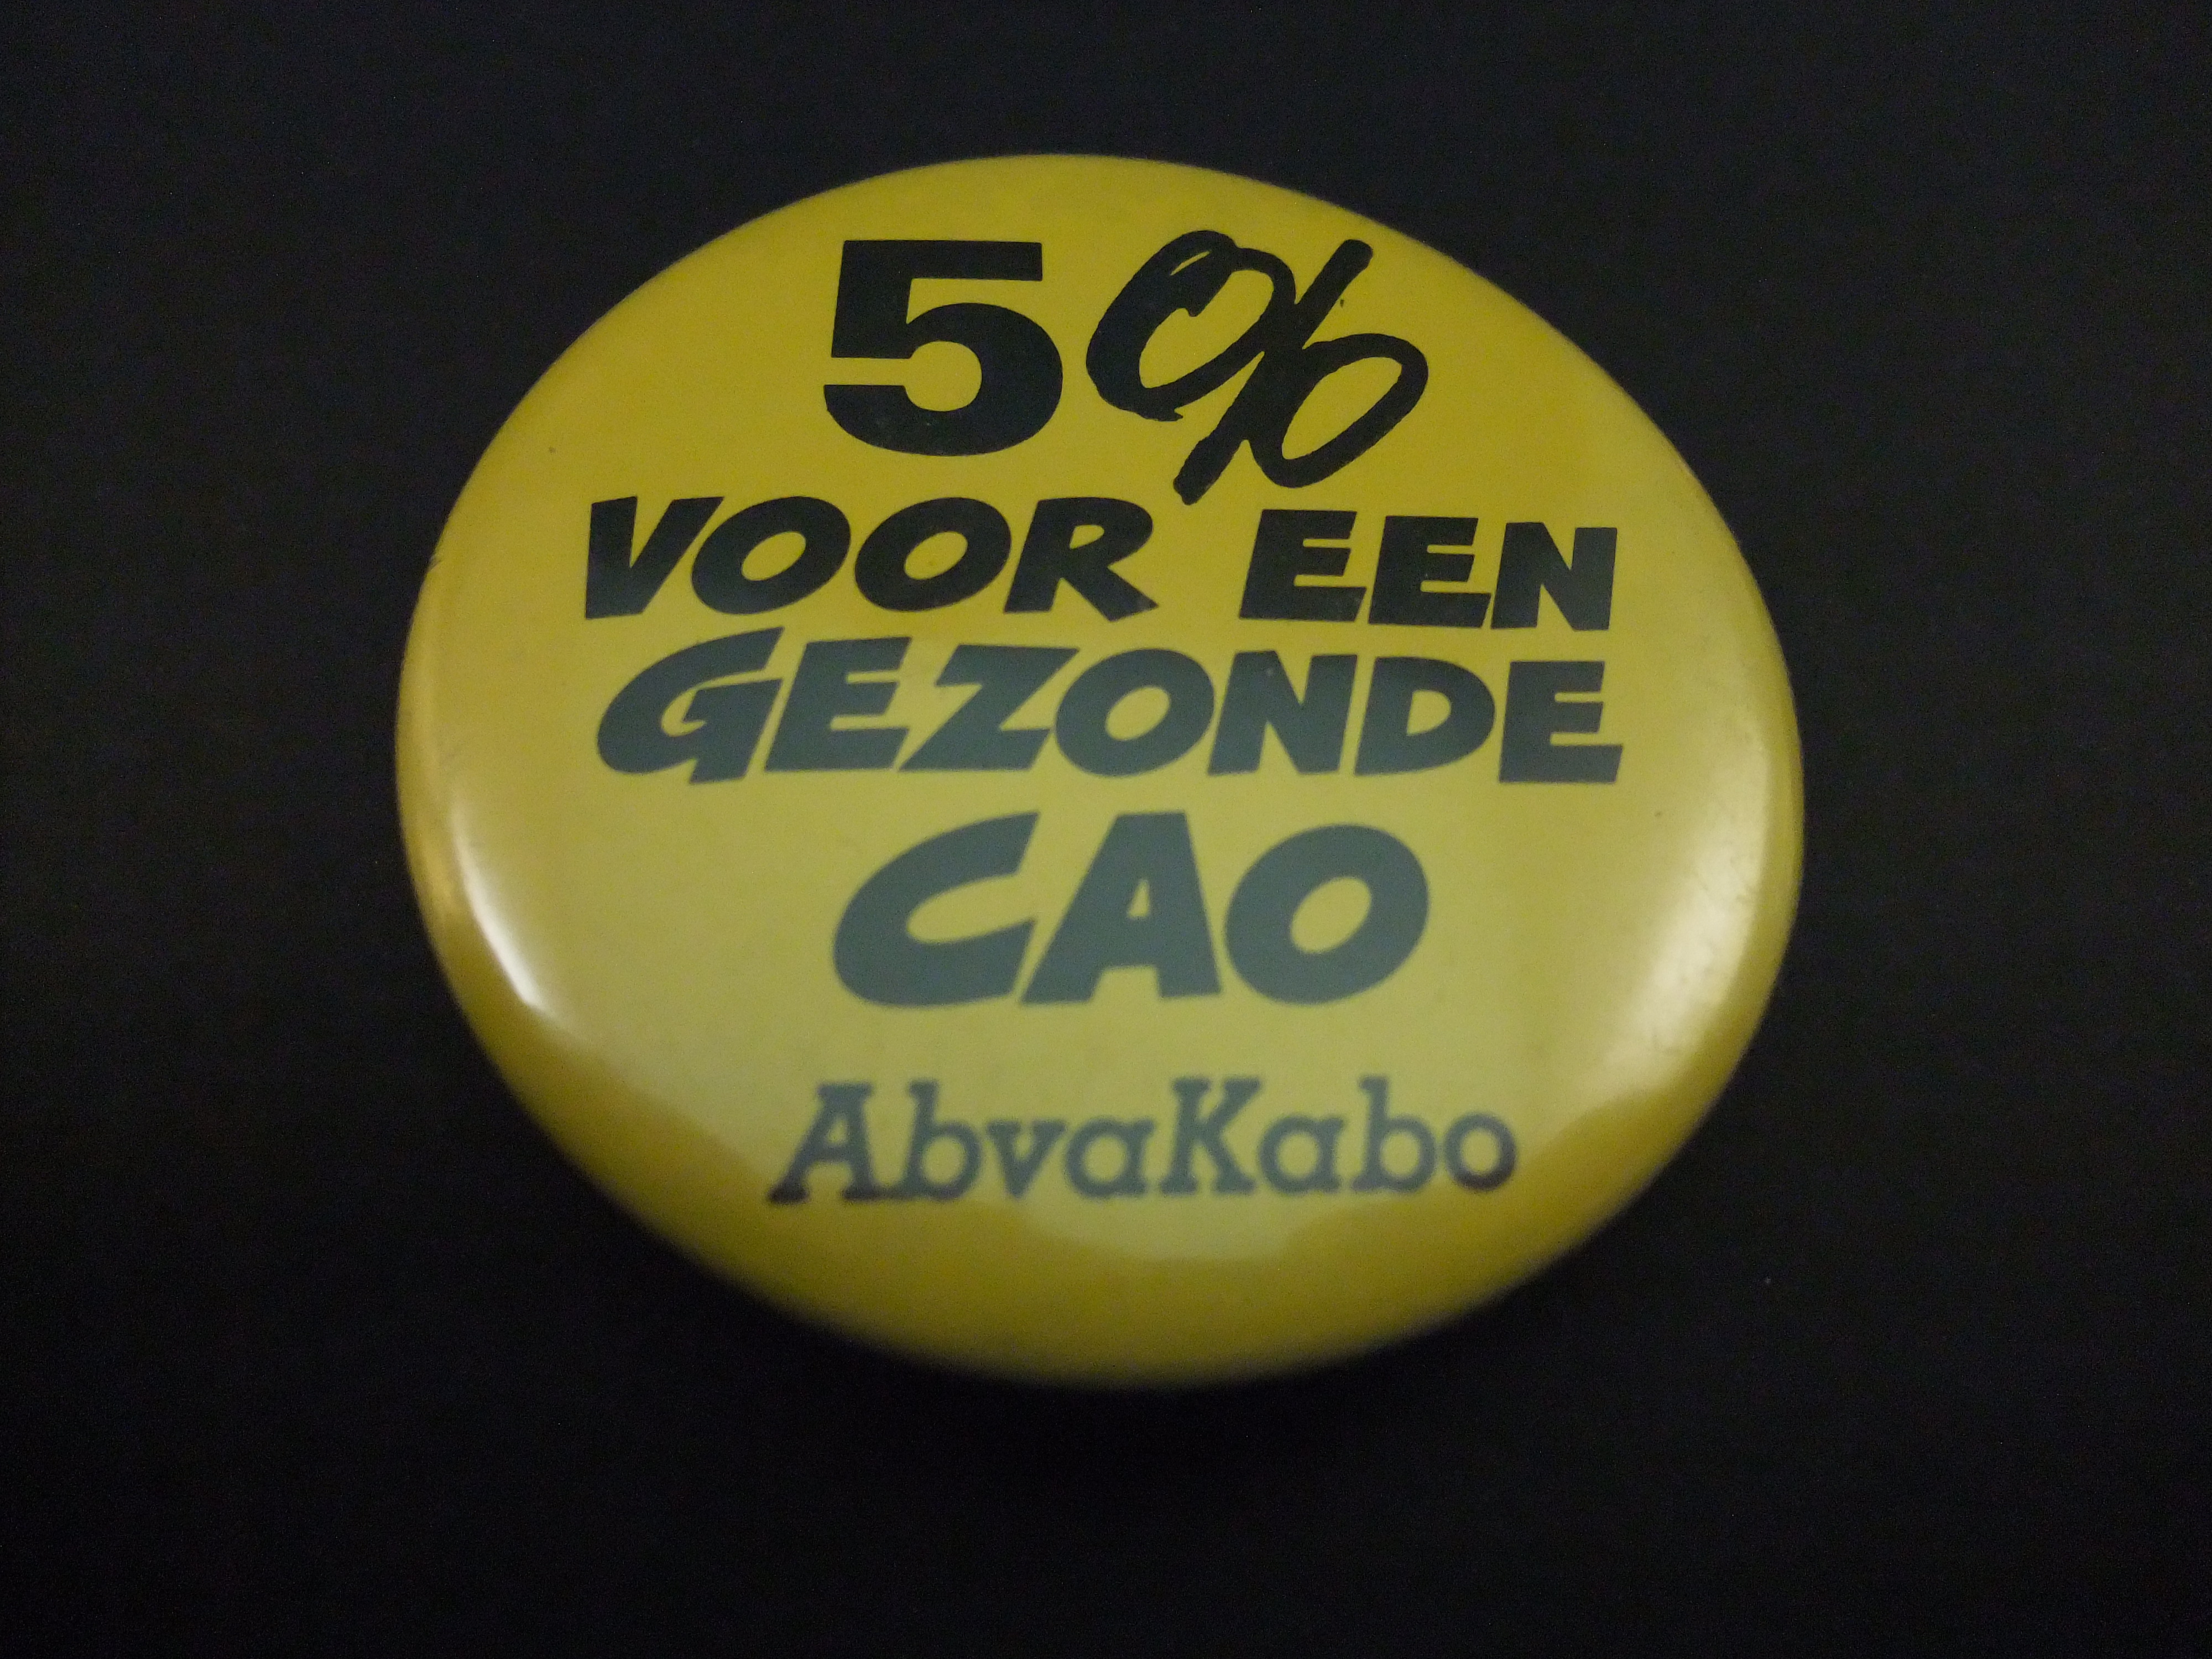 Abvakabo FNV ( Nederlandse vakbond ) voor gezonde CAO